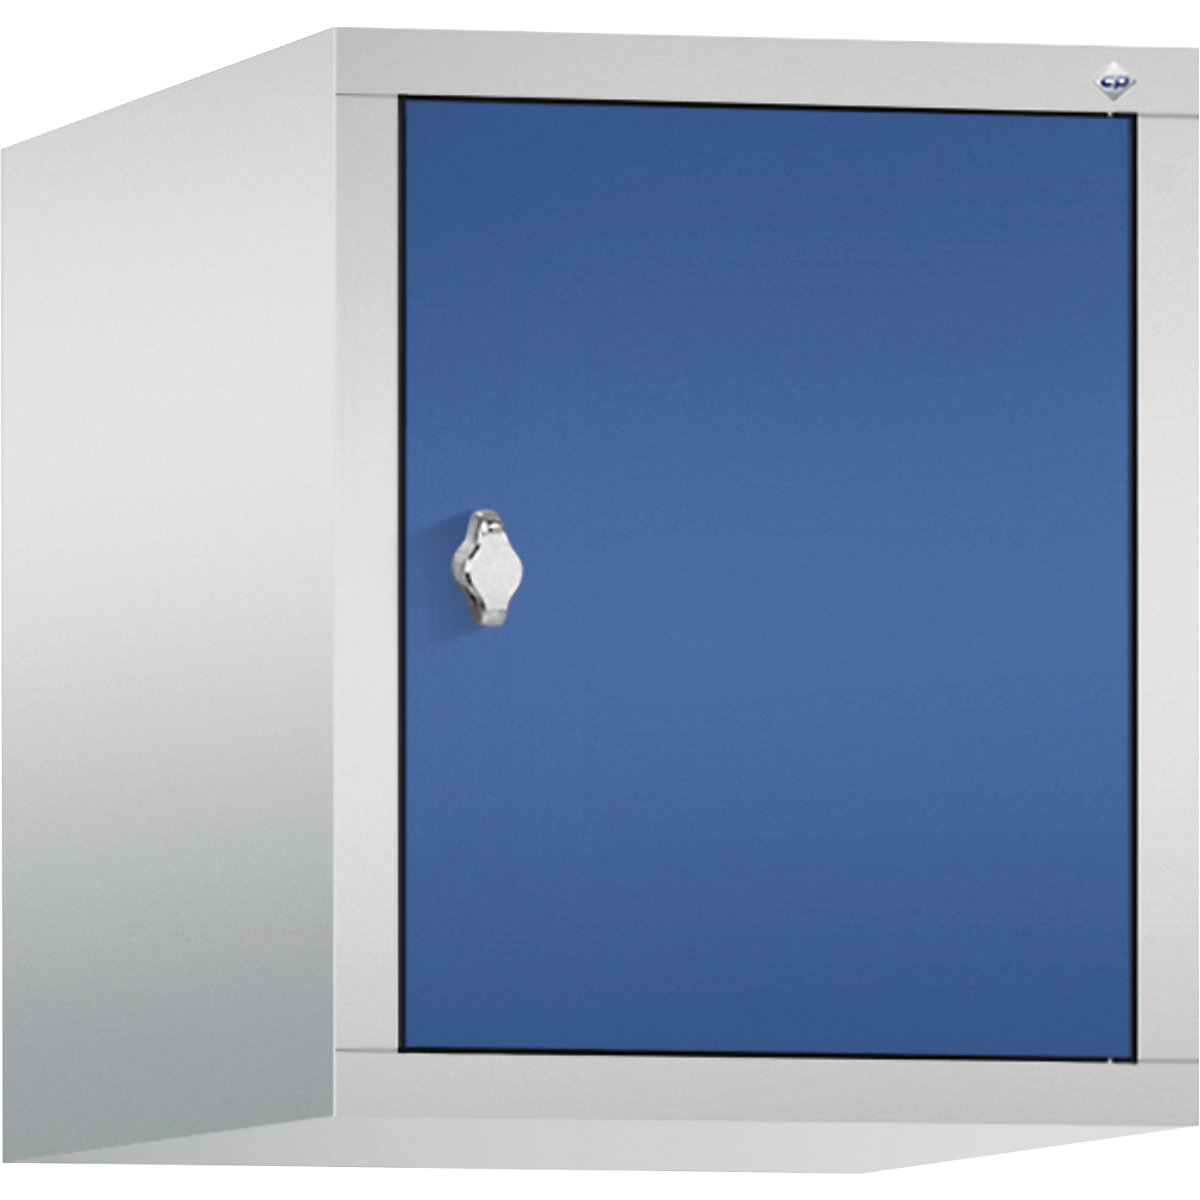 C+P – Altillo CLASSIC, 1 compartimento, anchura de compartimento 400 mm, gris luminoso / azul genciana